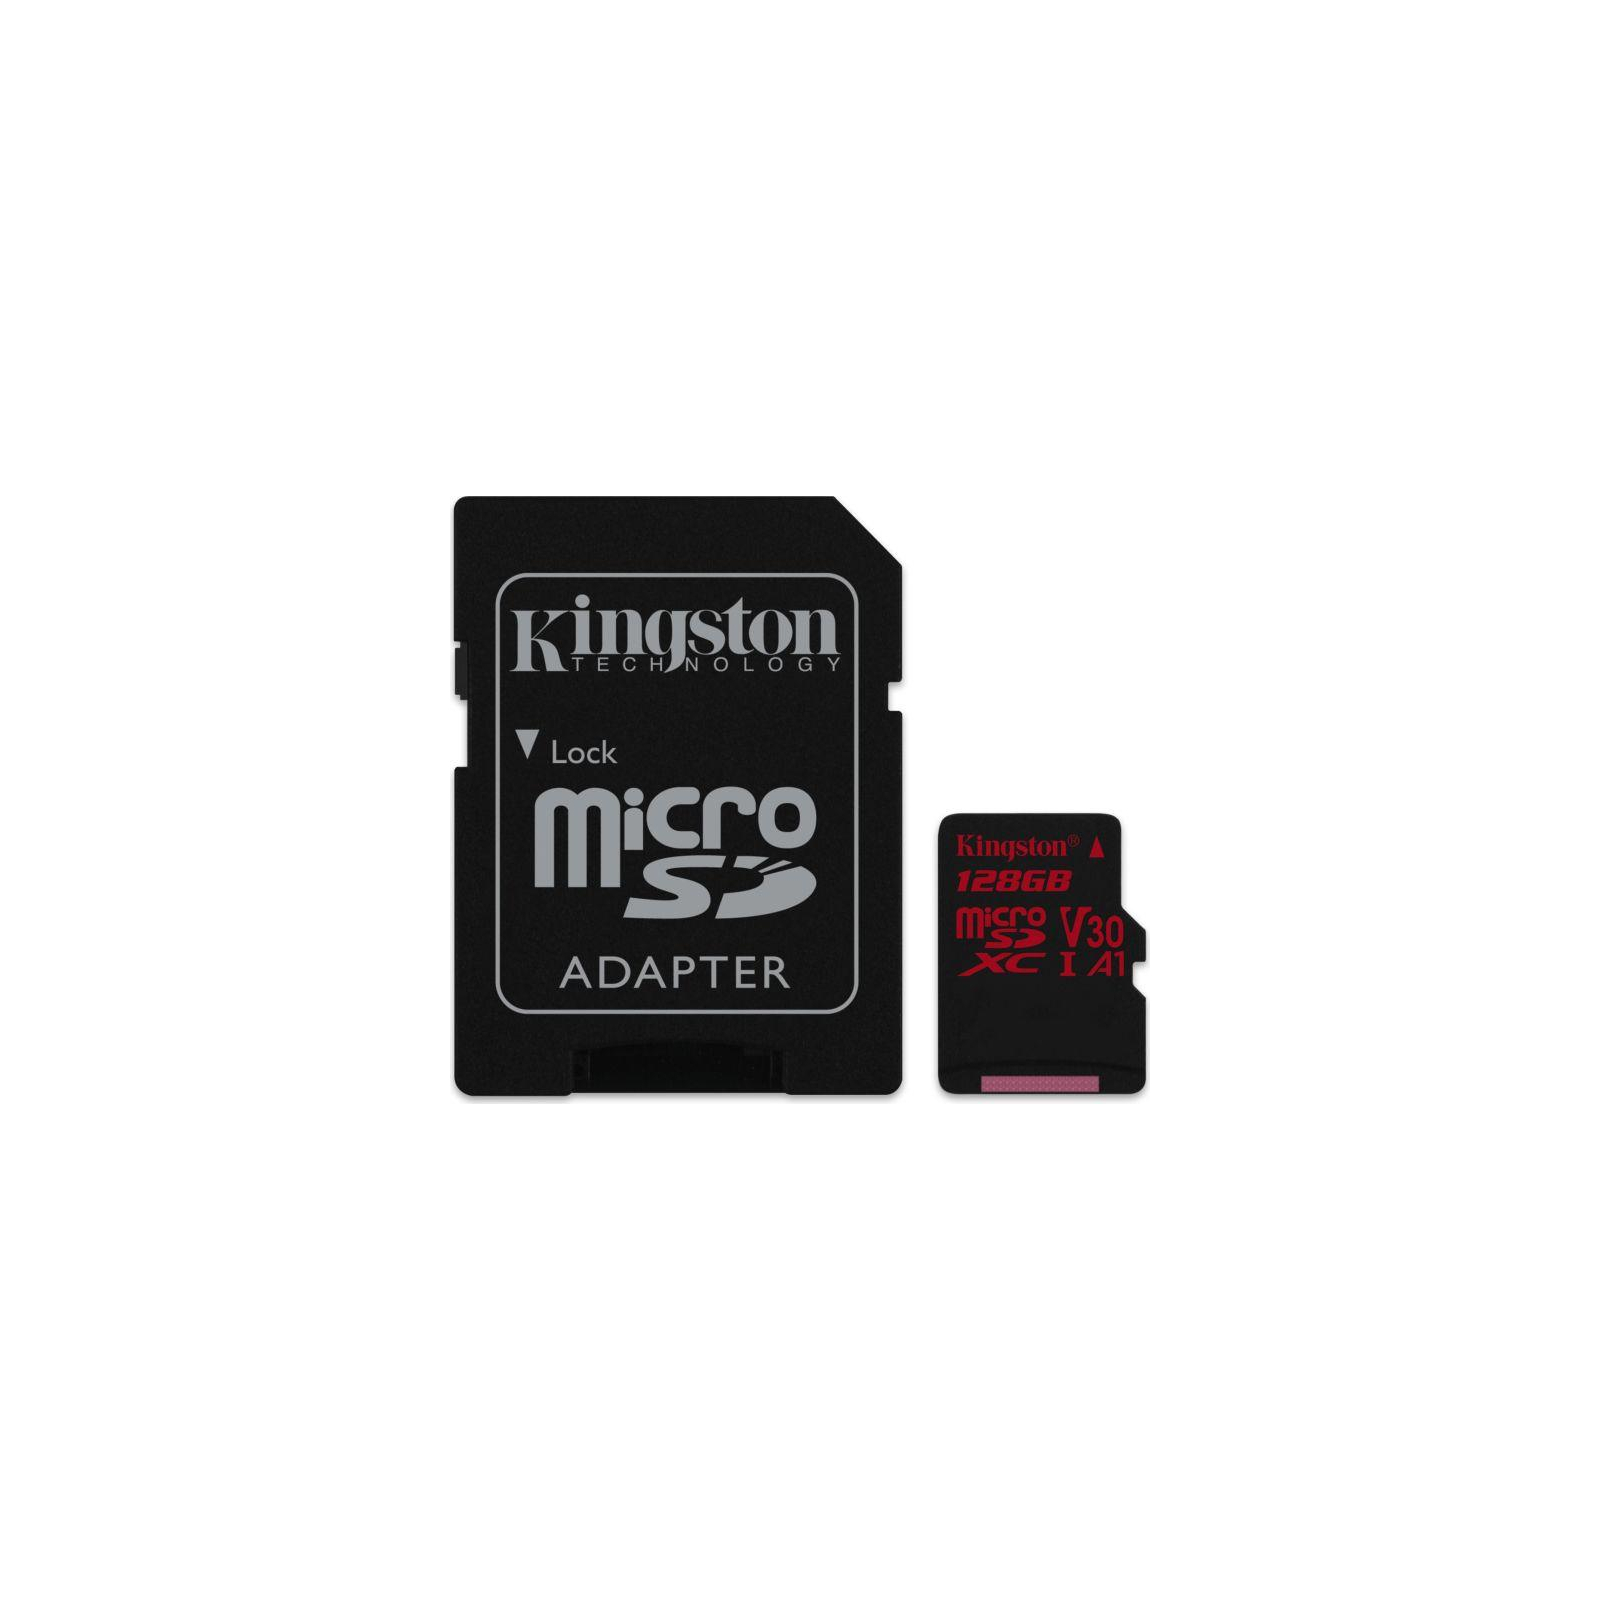 Карта памяти Kingston 128GB microSDXC class 10 UHS-I U3 (SDCR/128GB)